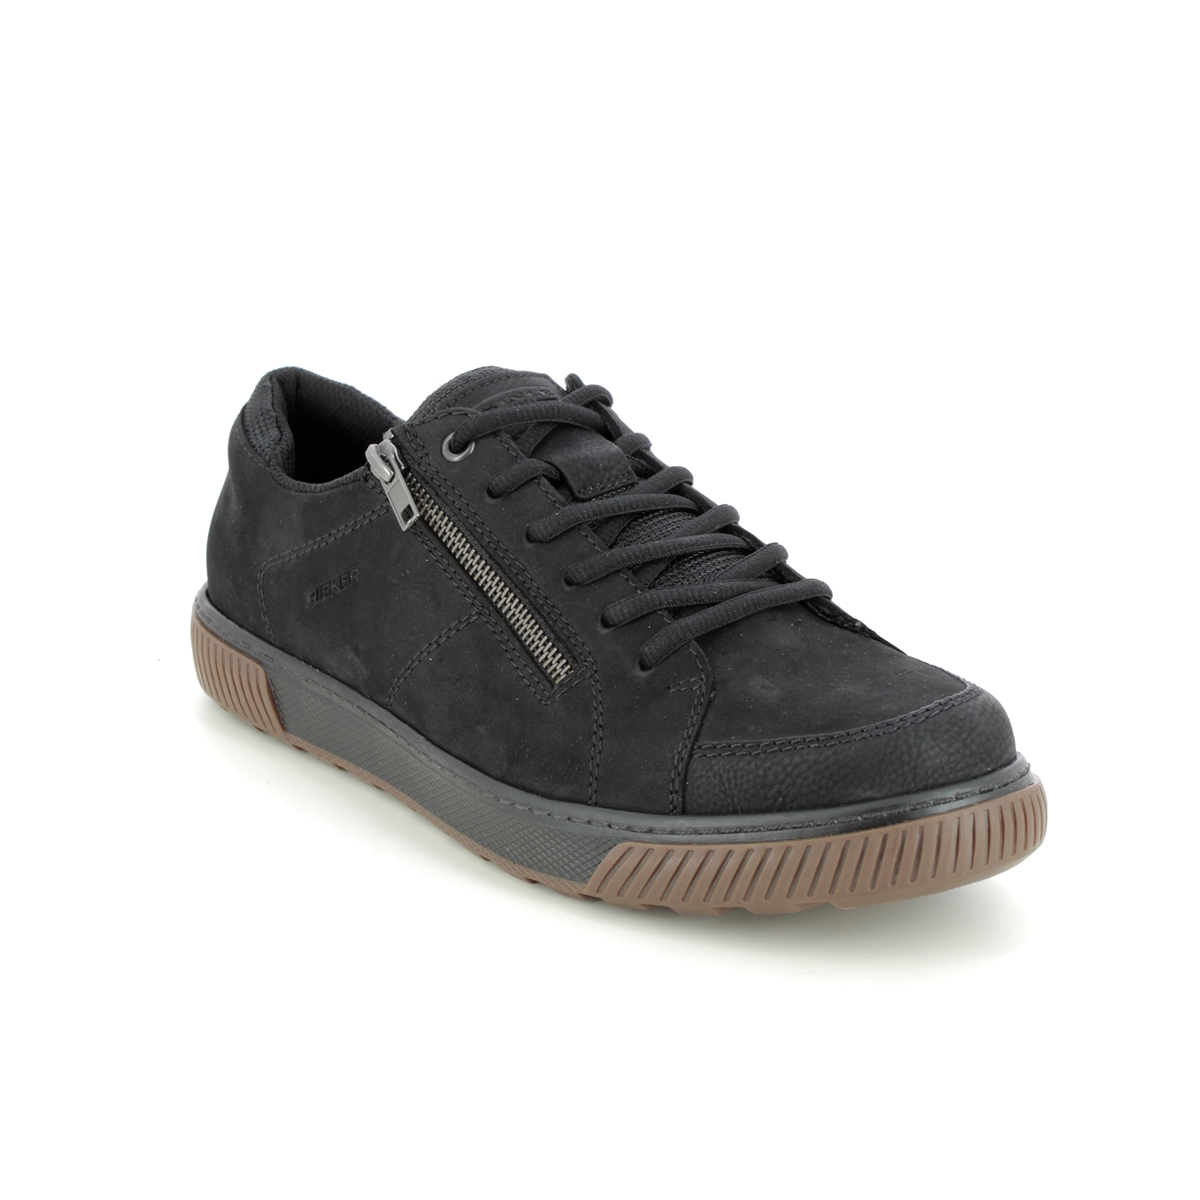 Rieker Urbanzi Black Suede Mens Comfort Shoes 18910-00 In Size 44 In Plain Black Suede